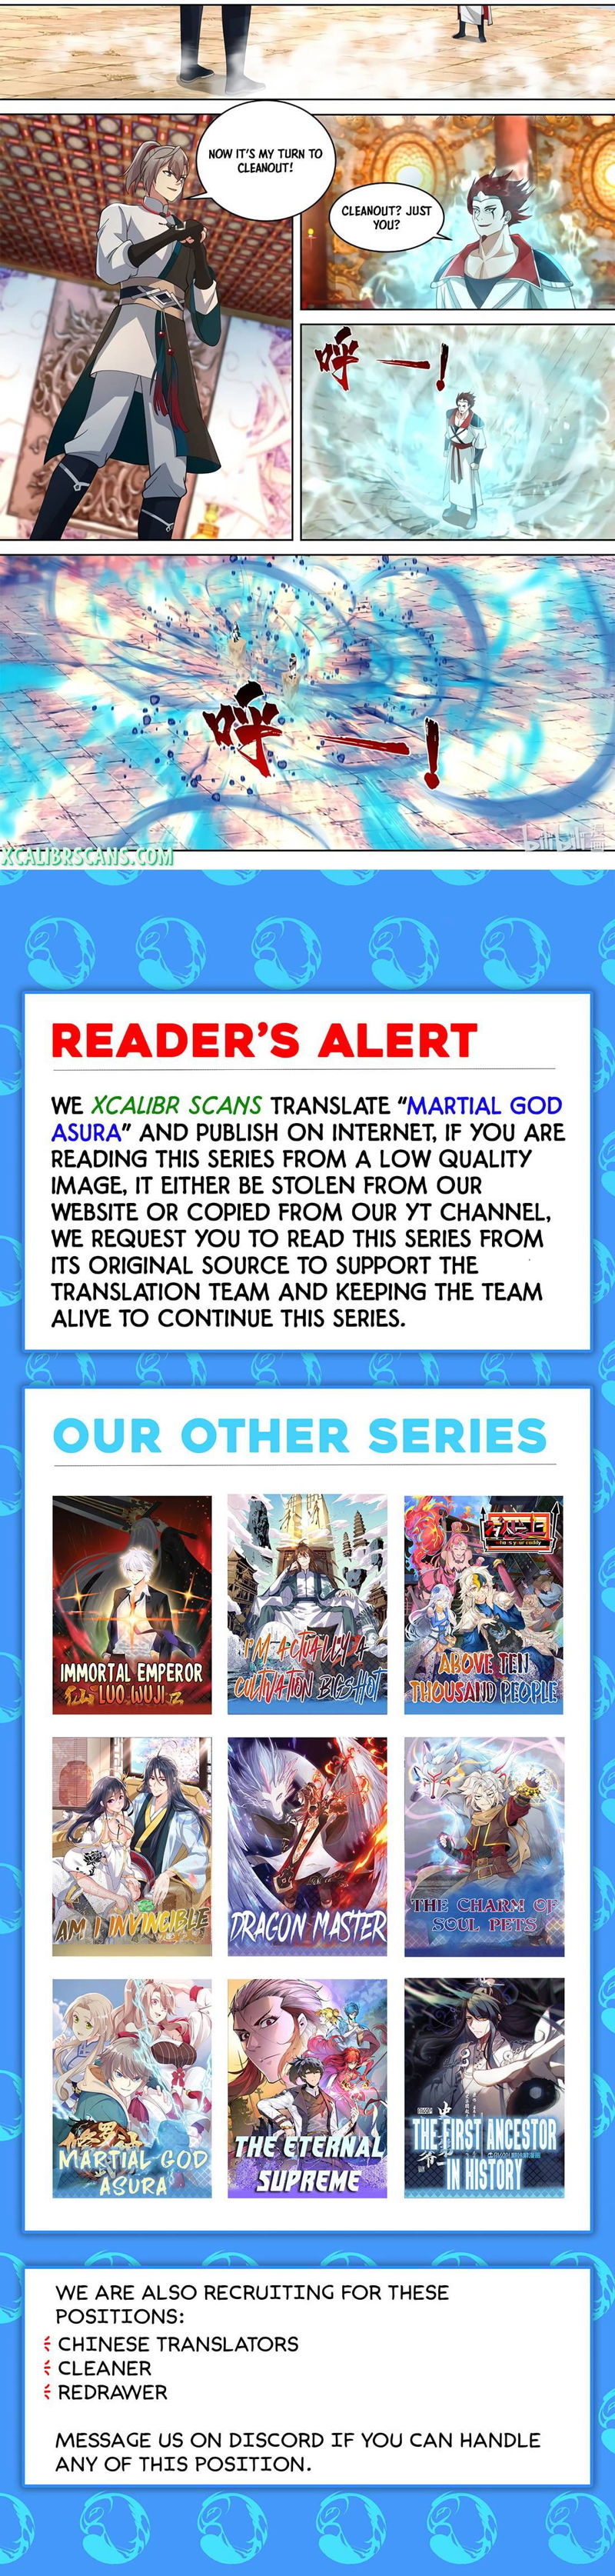 Martial God Asura Chapter 478 page 10